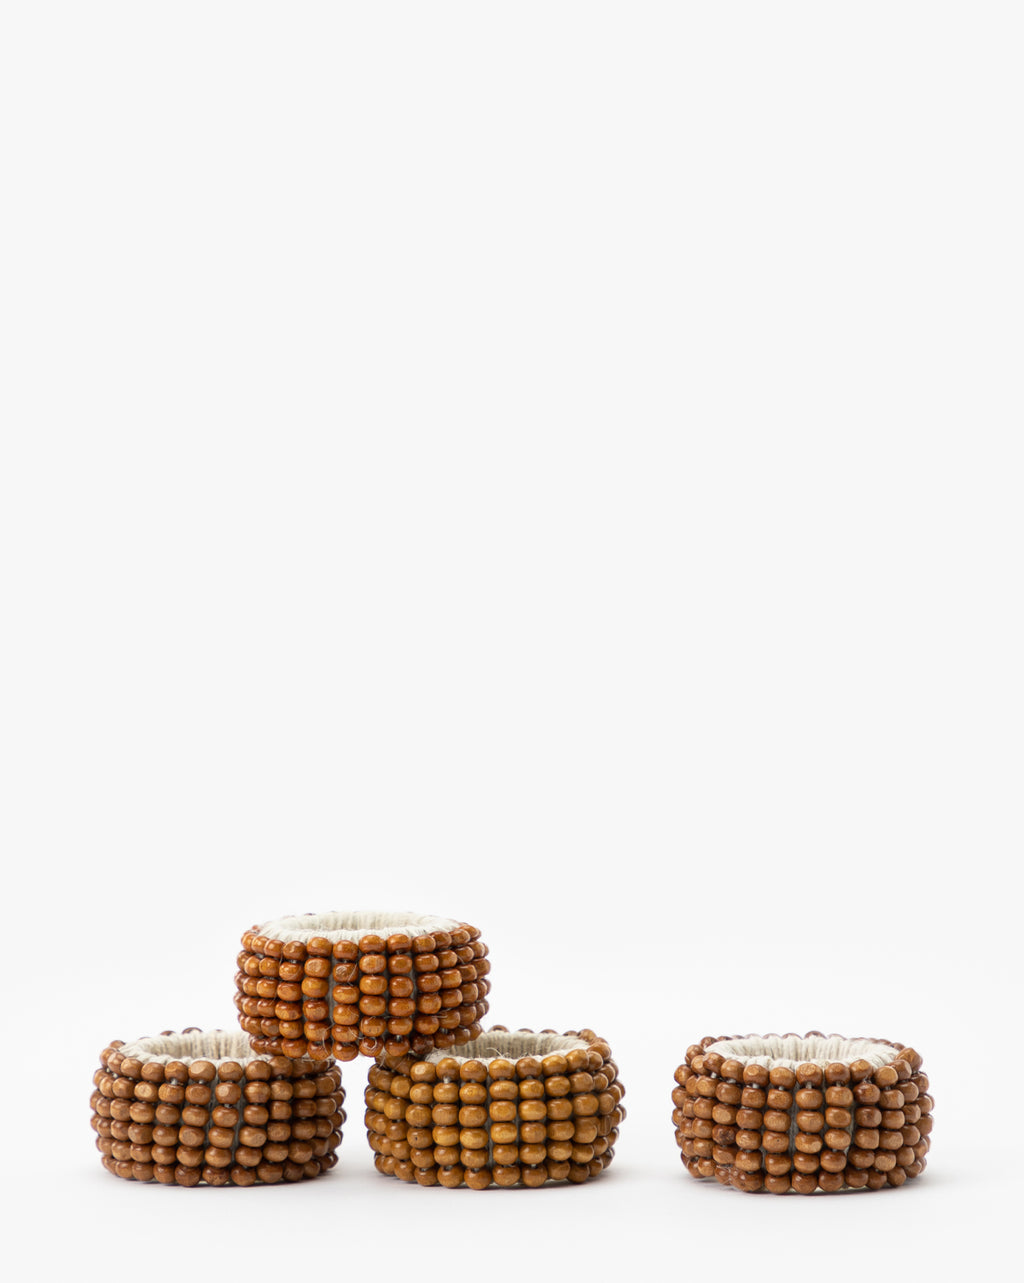 Chunky Mango Wood Napkin Rings (Set of 4) - On Sale - Bed Bath & Beyond -  27370569